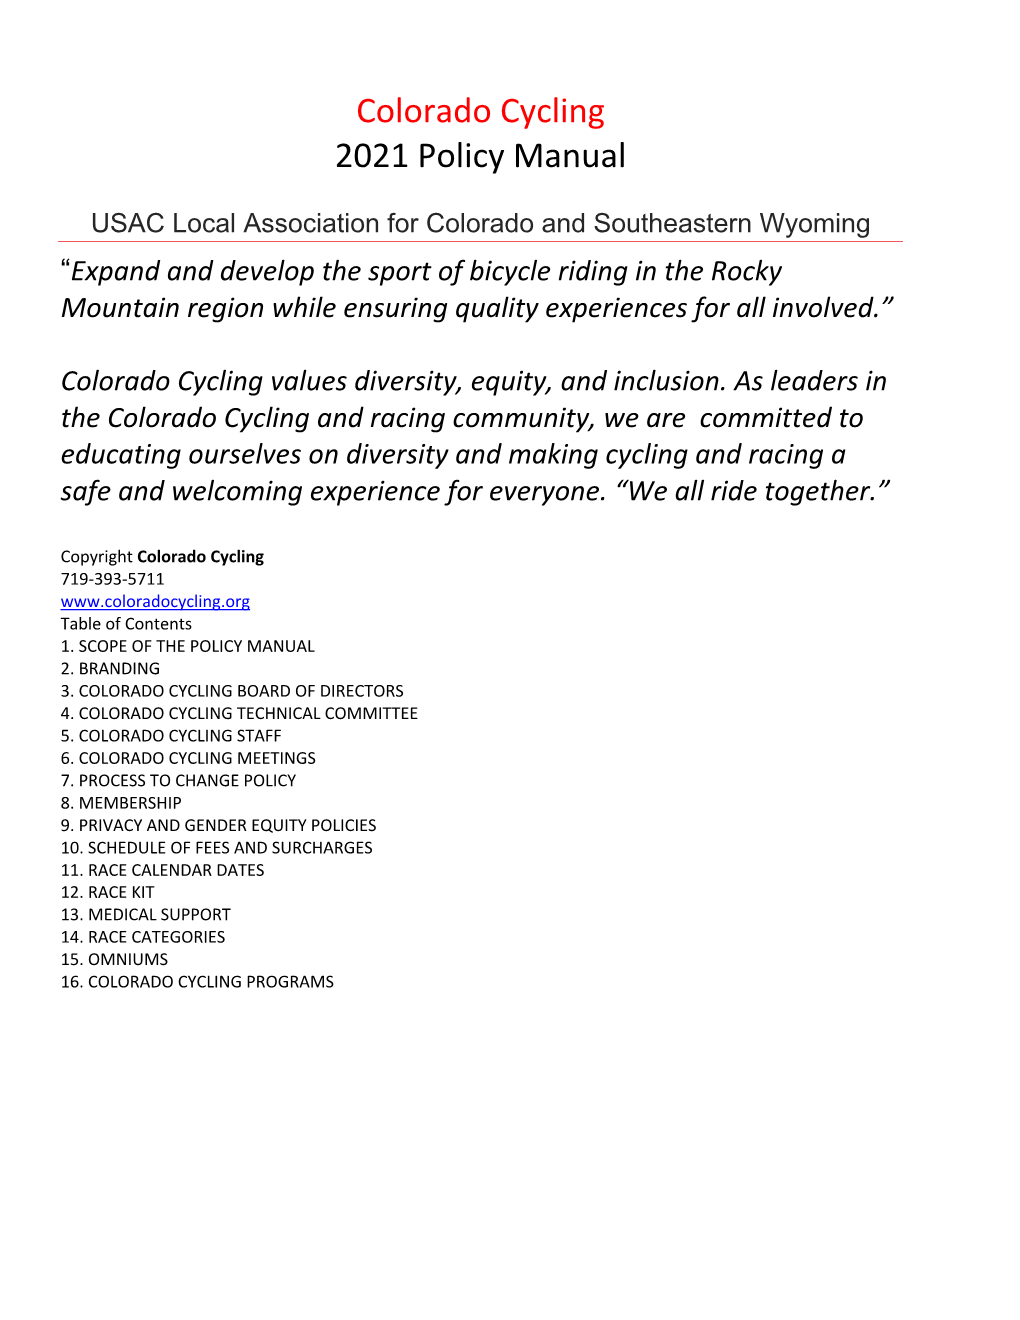 Colorado Cycling General Policy Manual